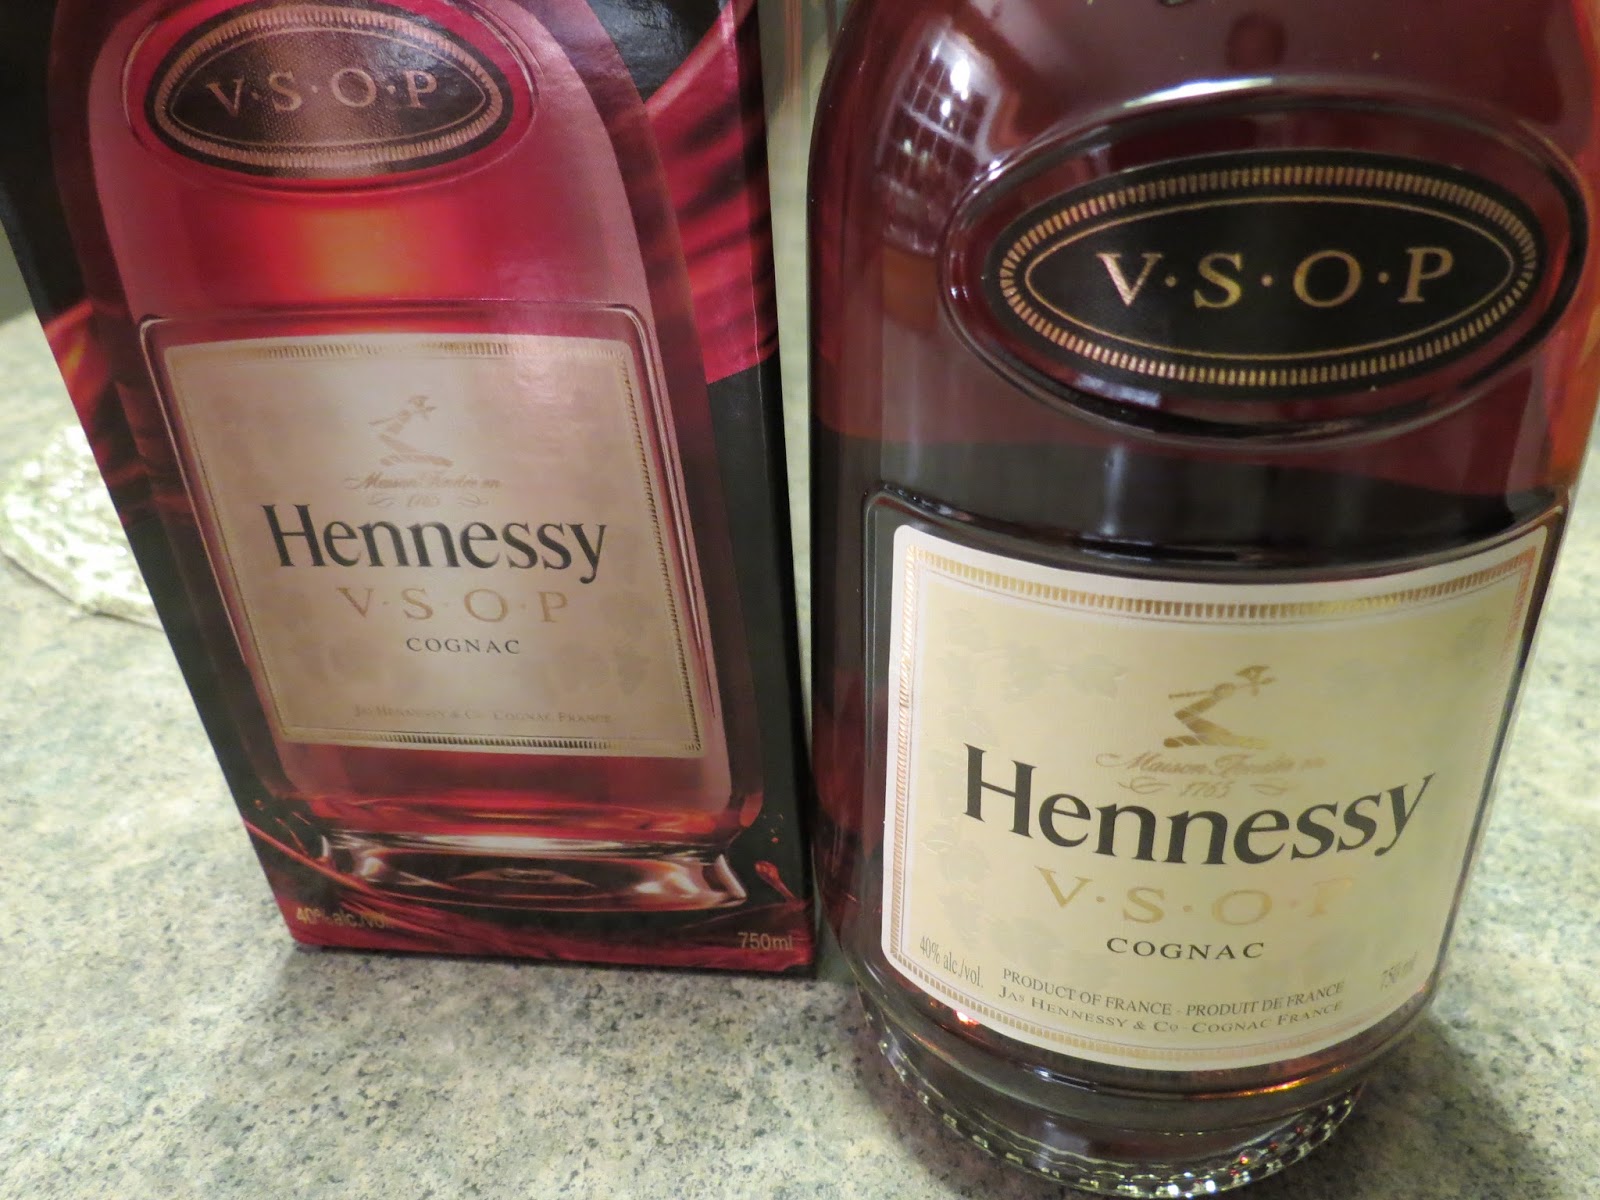 Hennessy V.S.--PINT Cognac 375ml. MacArthur Beverages